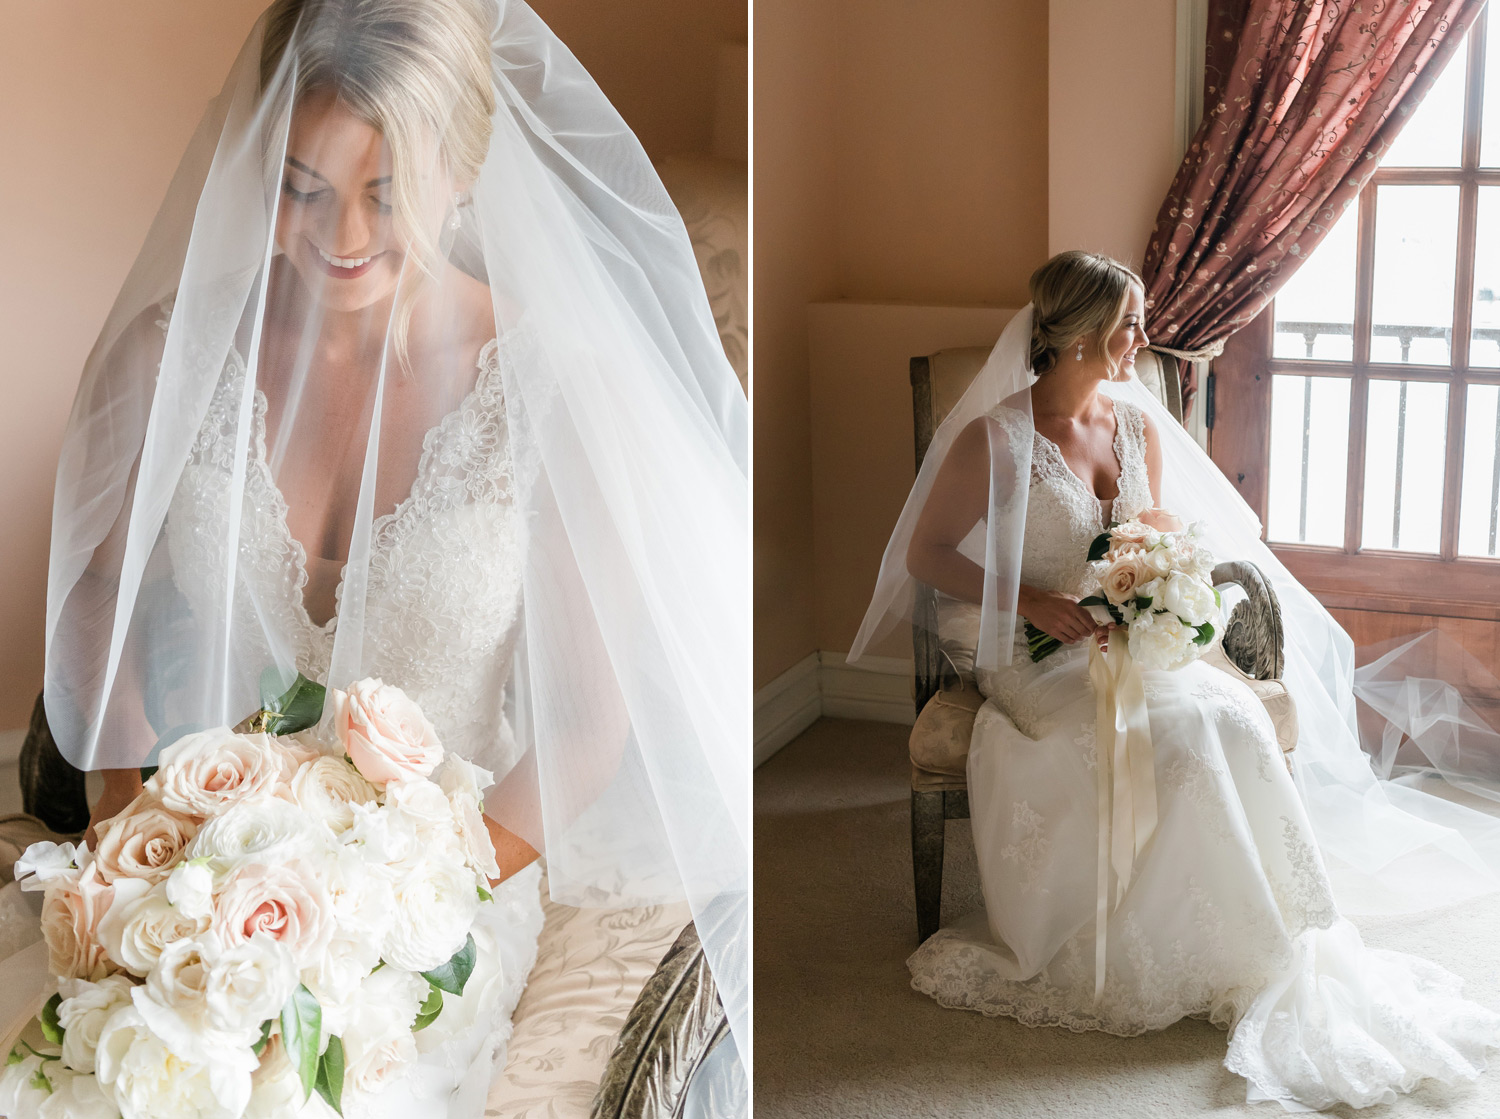 Hilton Lake Las Vegas Wedding Photography | Kristen Marie Weddings + Portraits